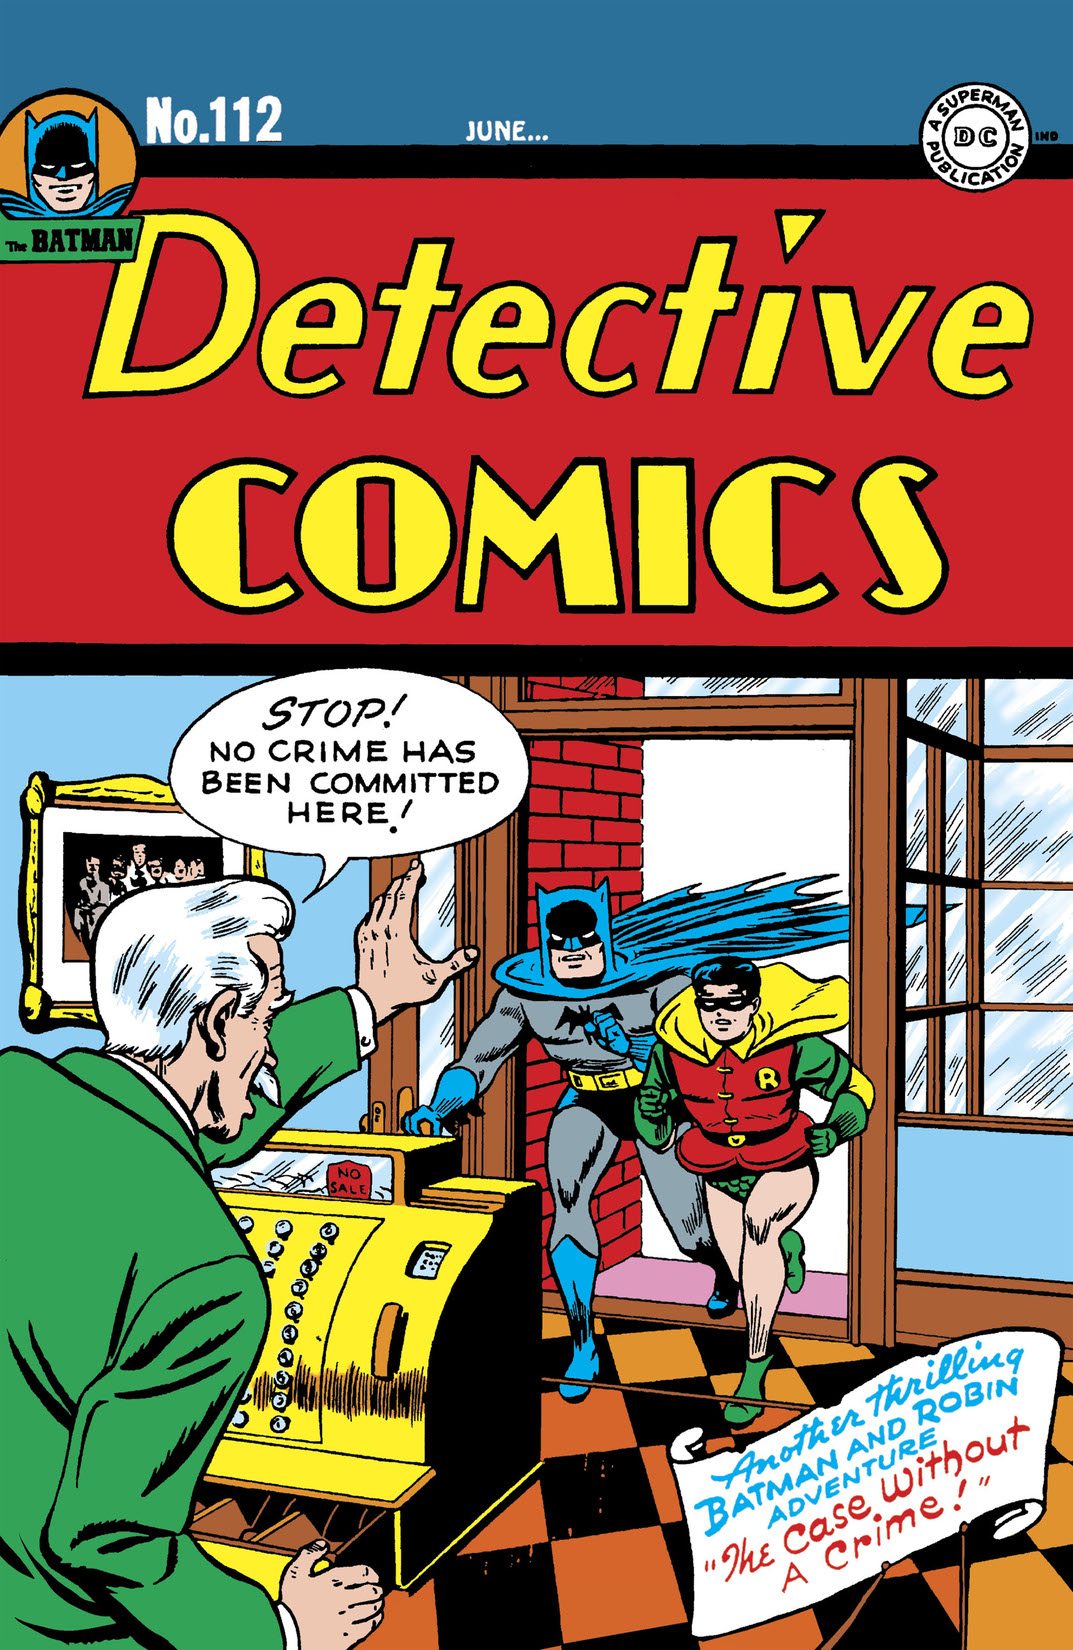 Detective Comics (1937-) #112 preview images